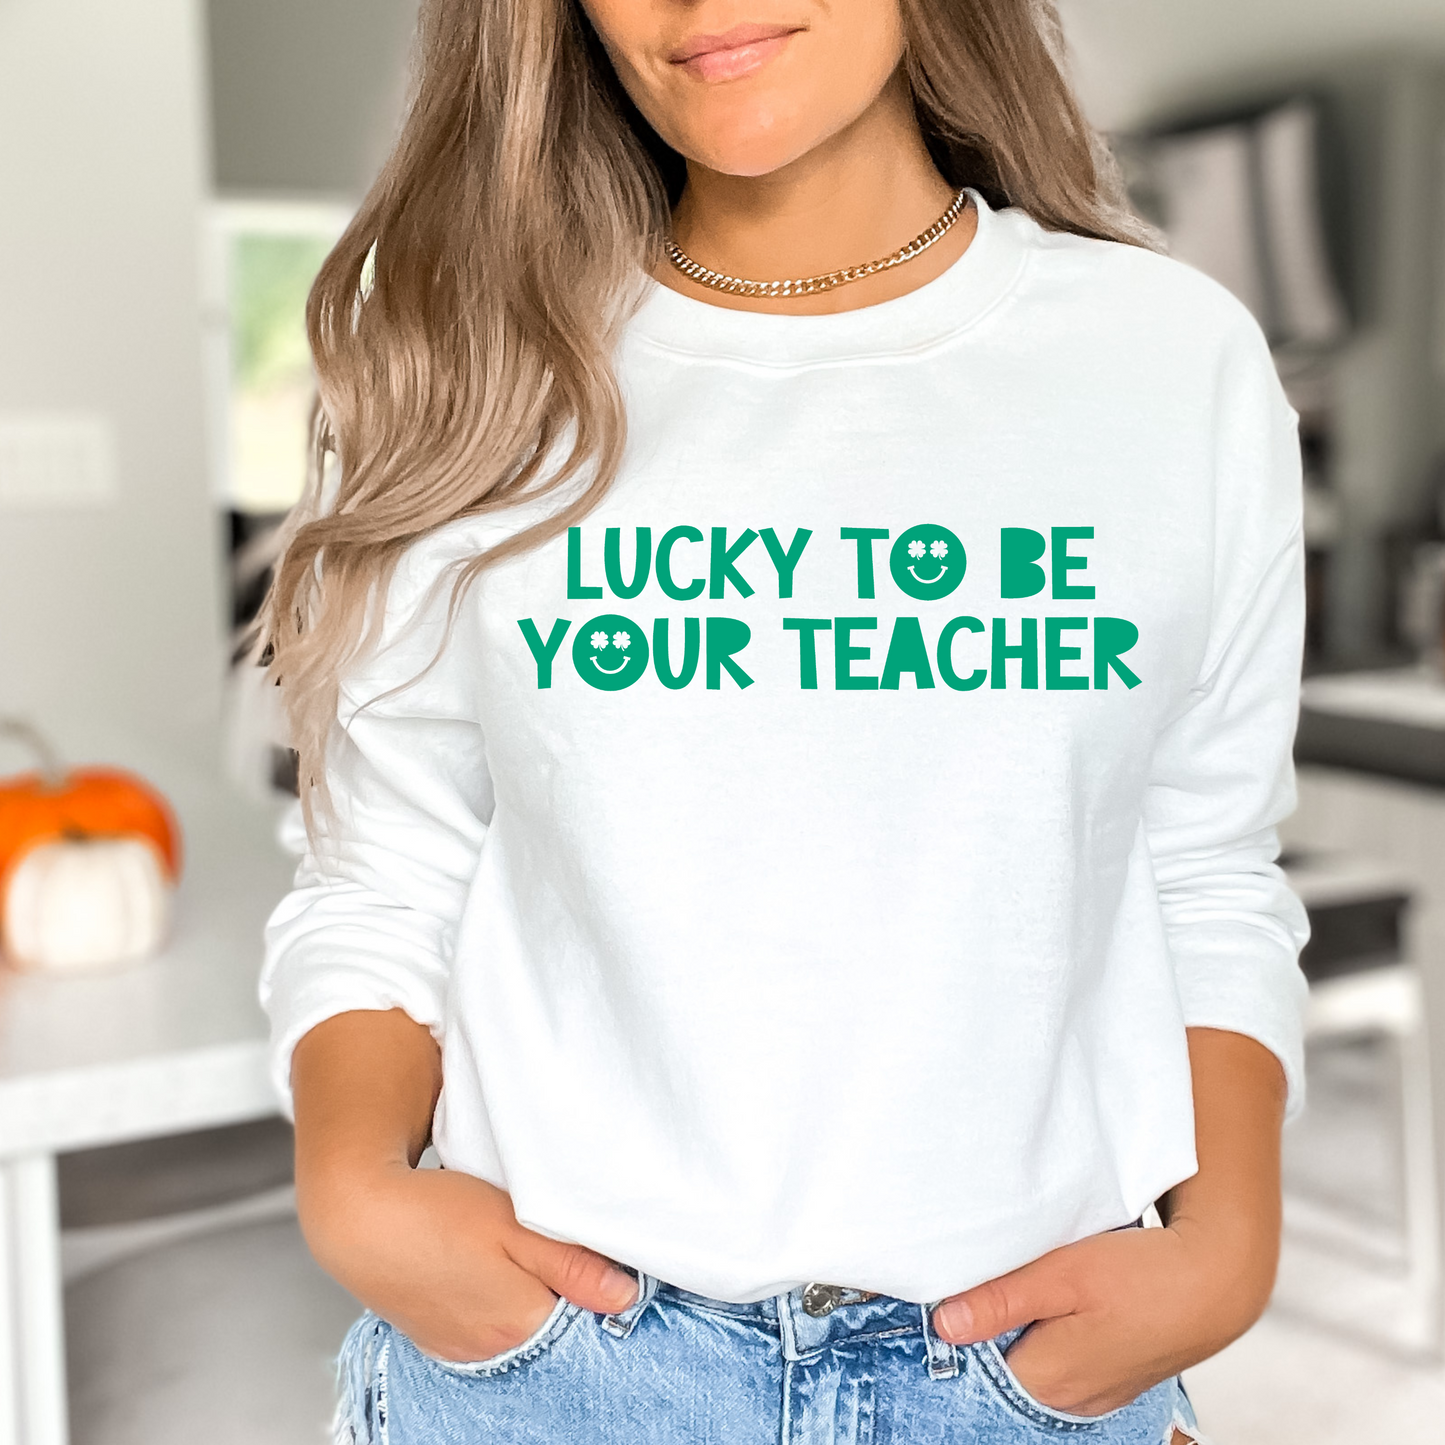 Lucky to Be Your Teacher Crewneck Sweatshirt